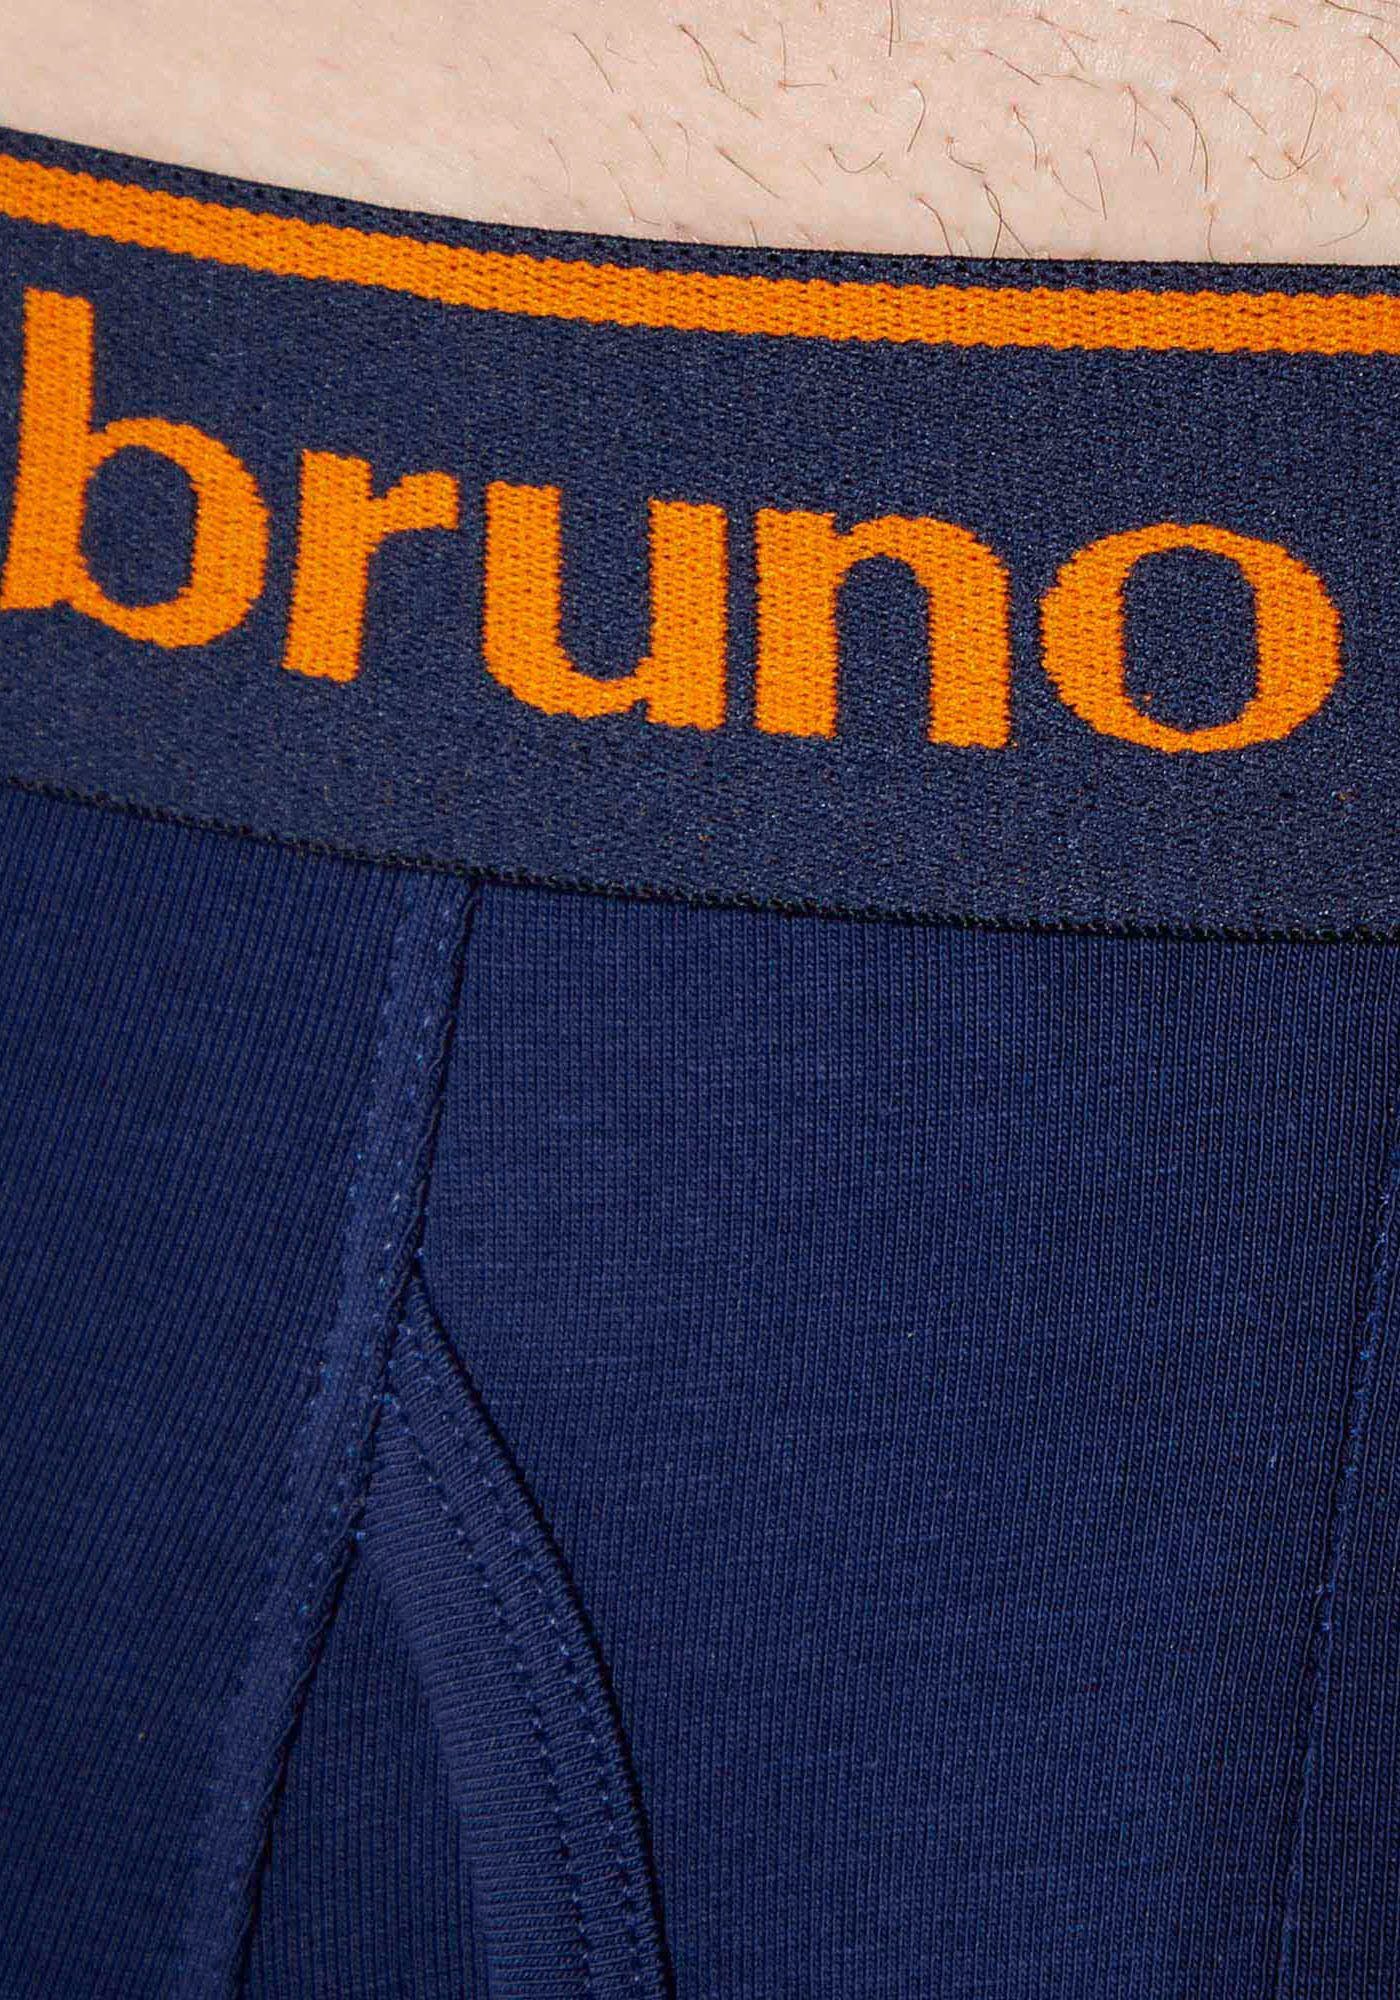 2Pack Kontrastfarbene Bruno Banani 2-St) Quick blau-schwarz (Packung, Boxershorts Short Access Details